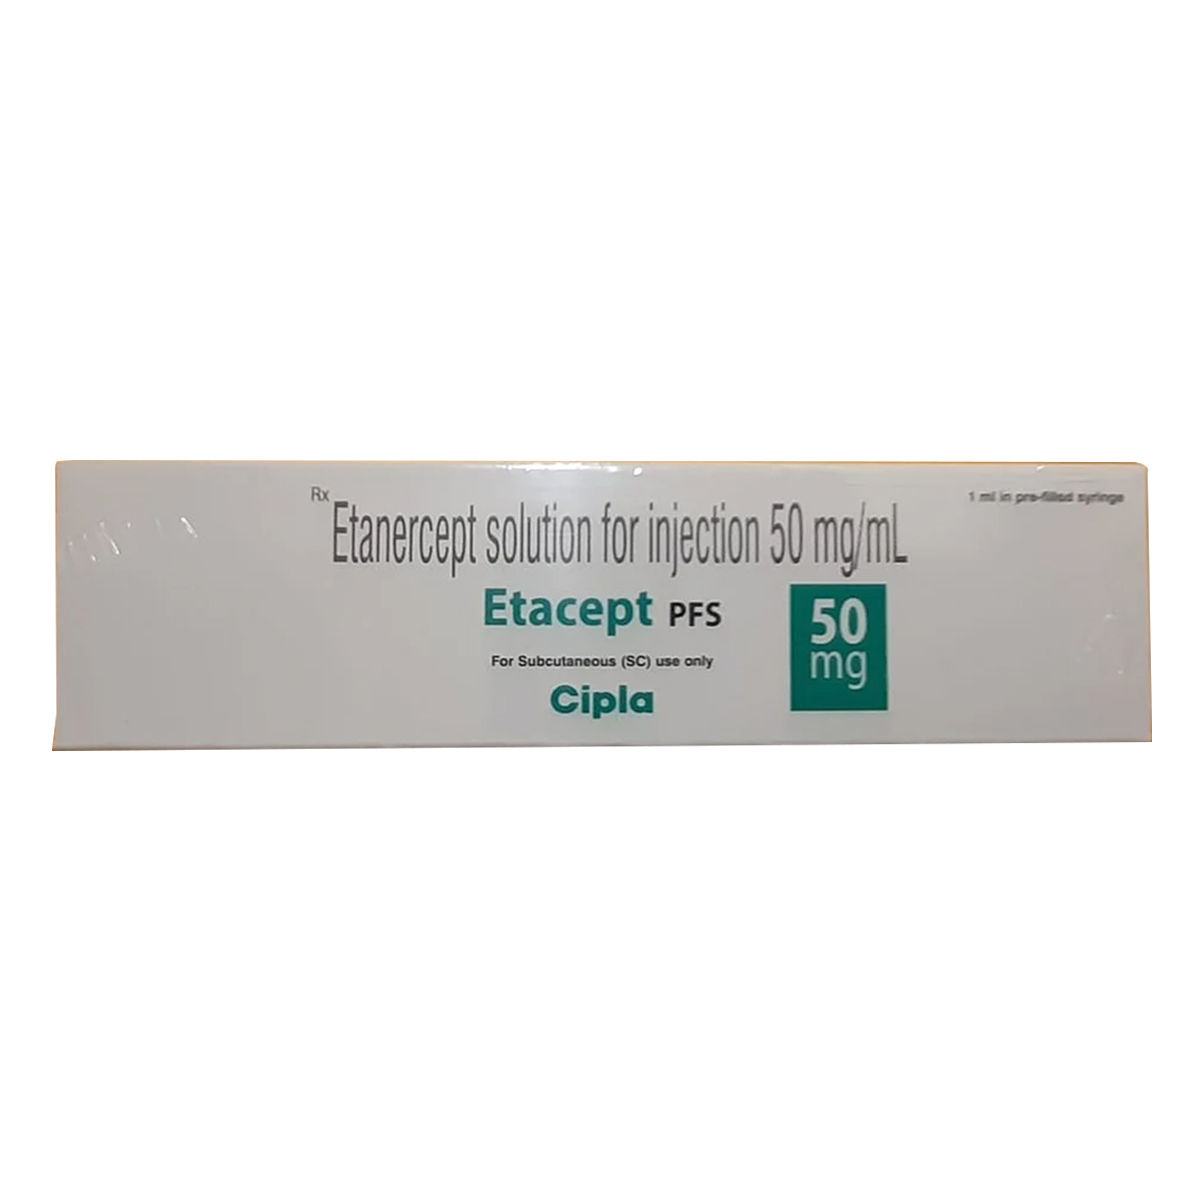 Buy Etacept Pfs 50 mg Injection 1 ml Online